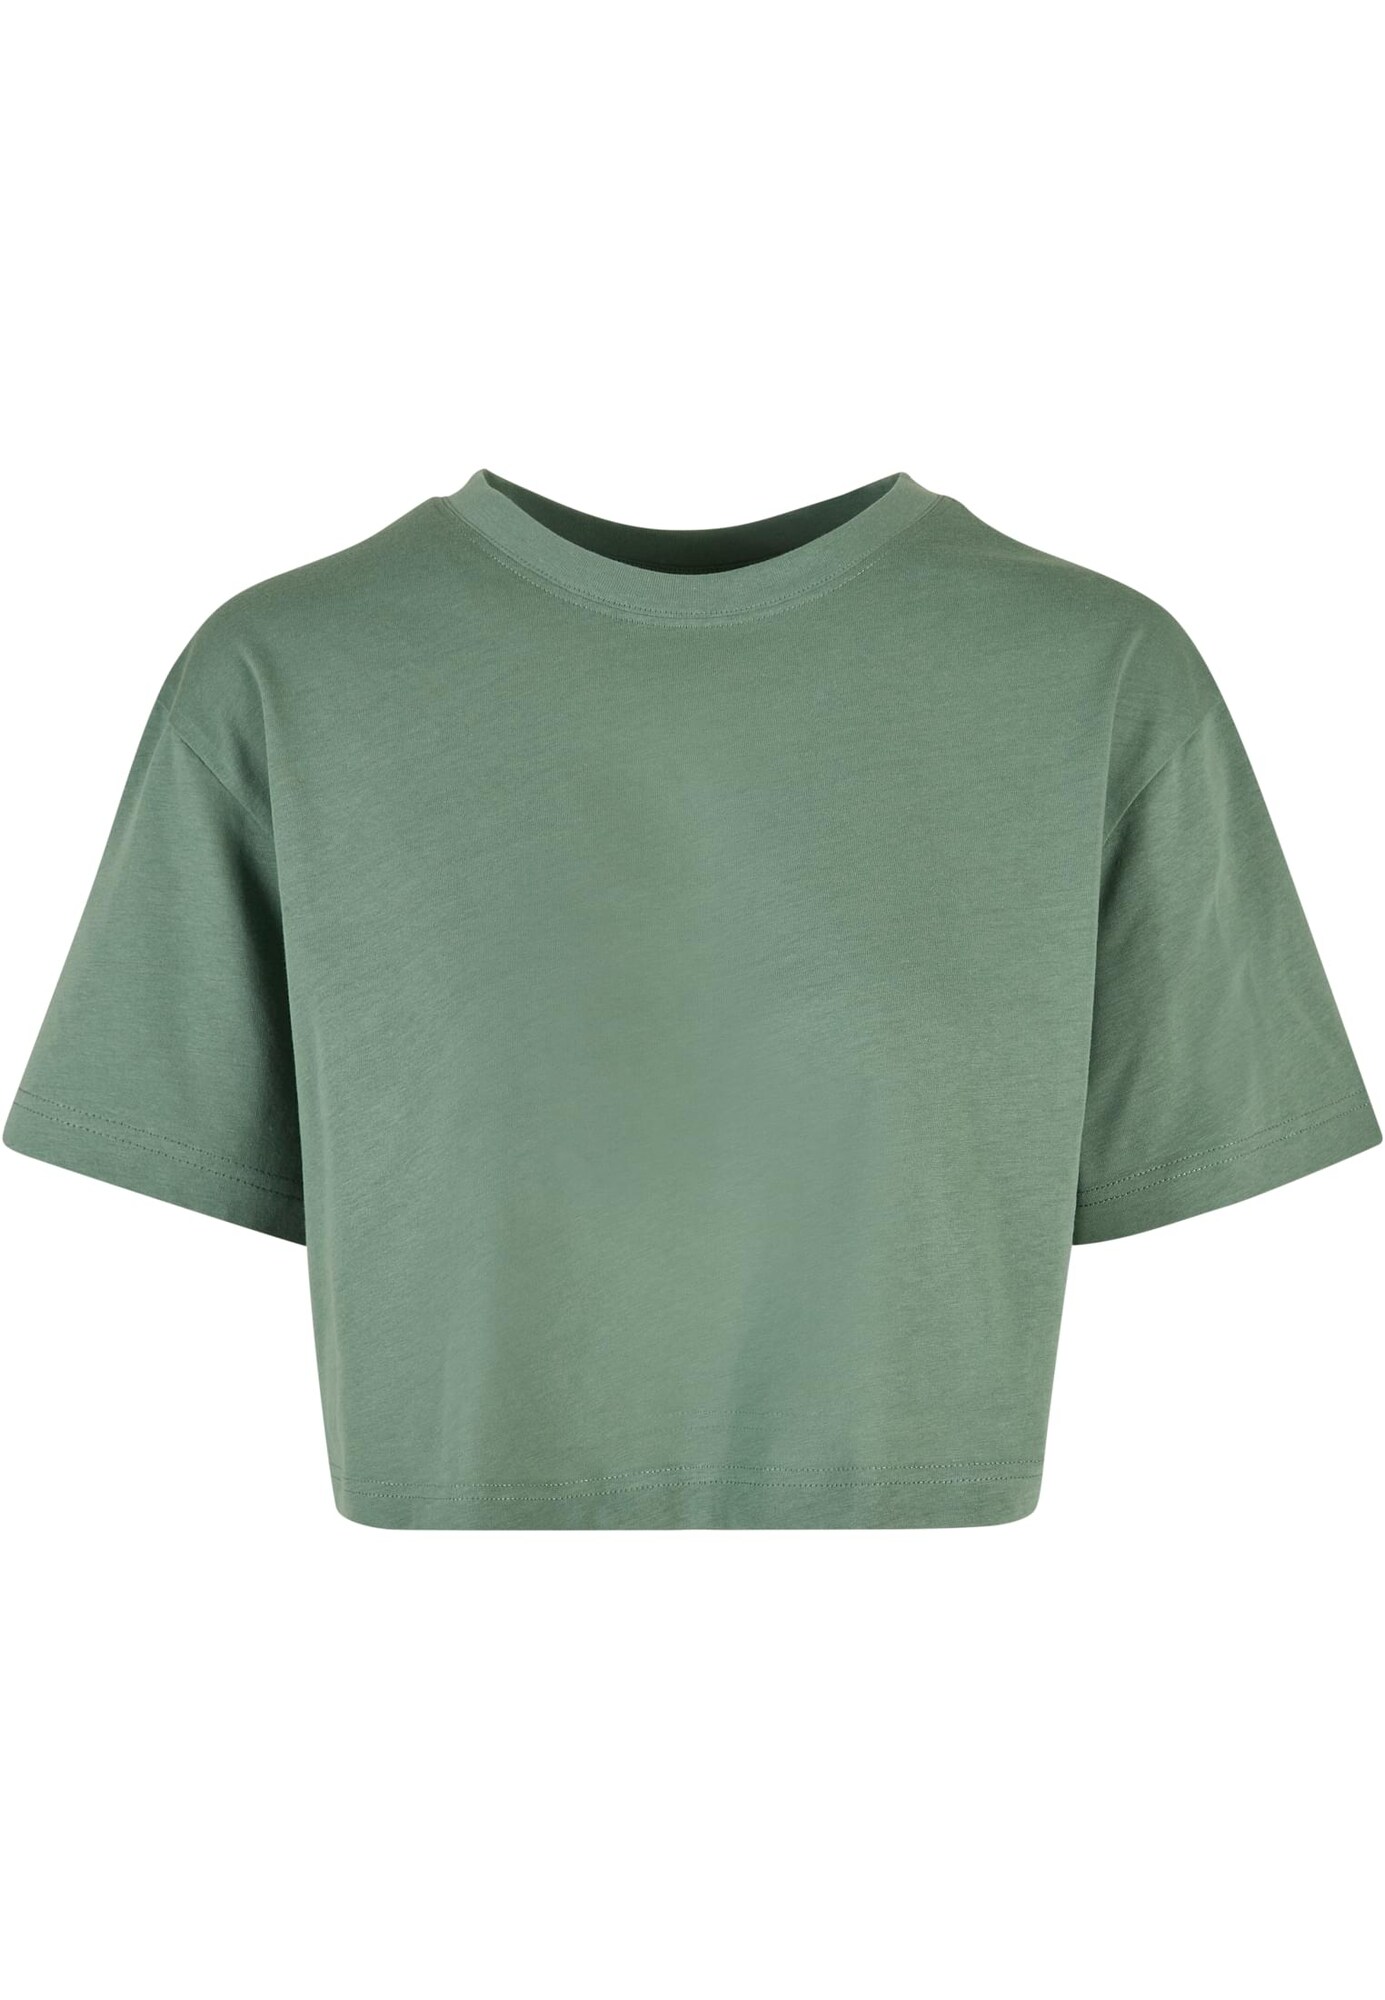 Urban Classics Skjorte grønn product